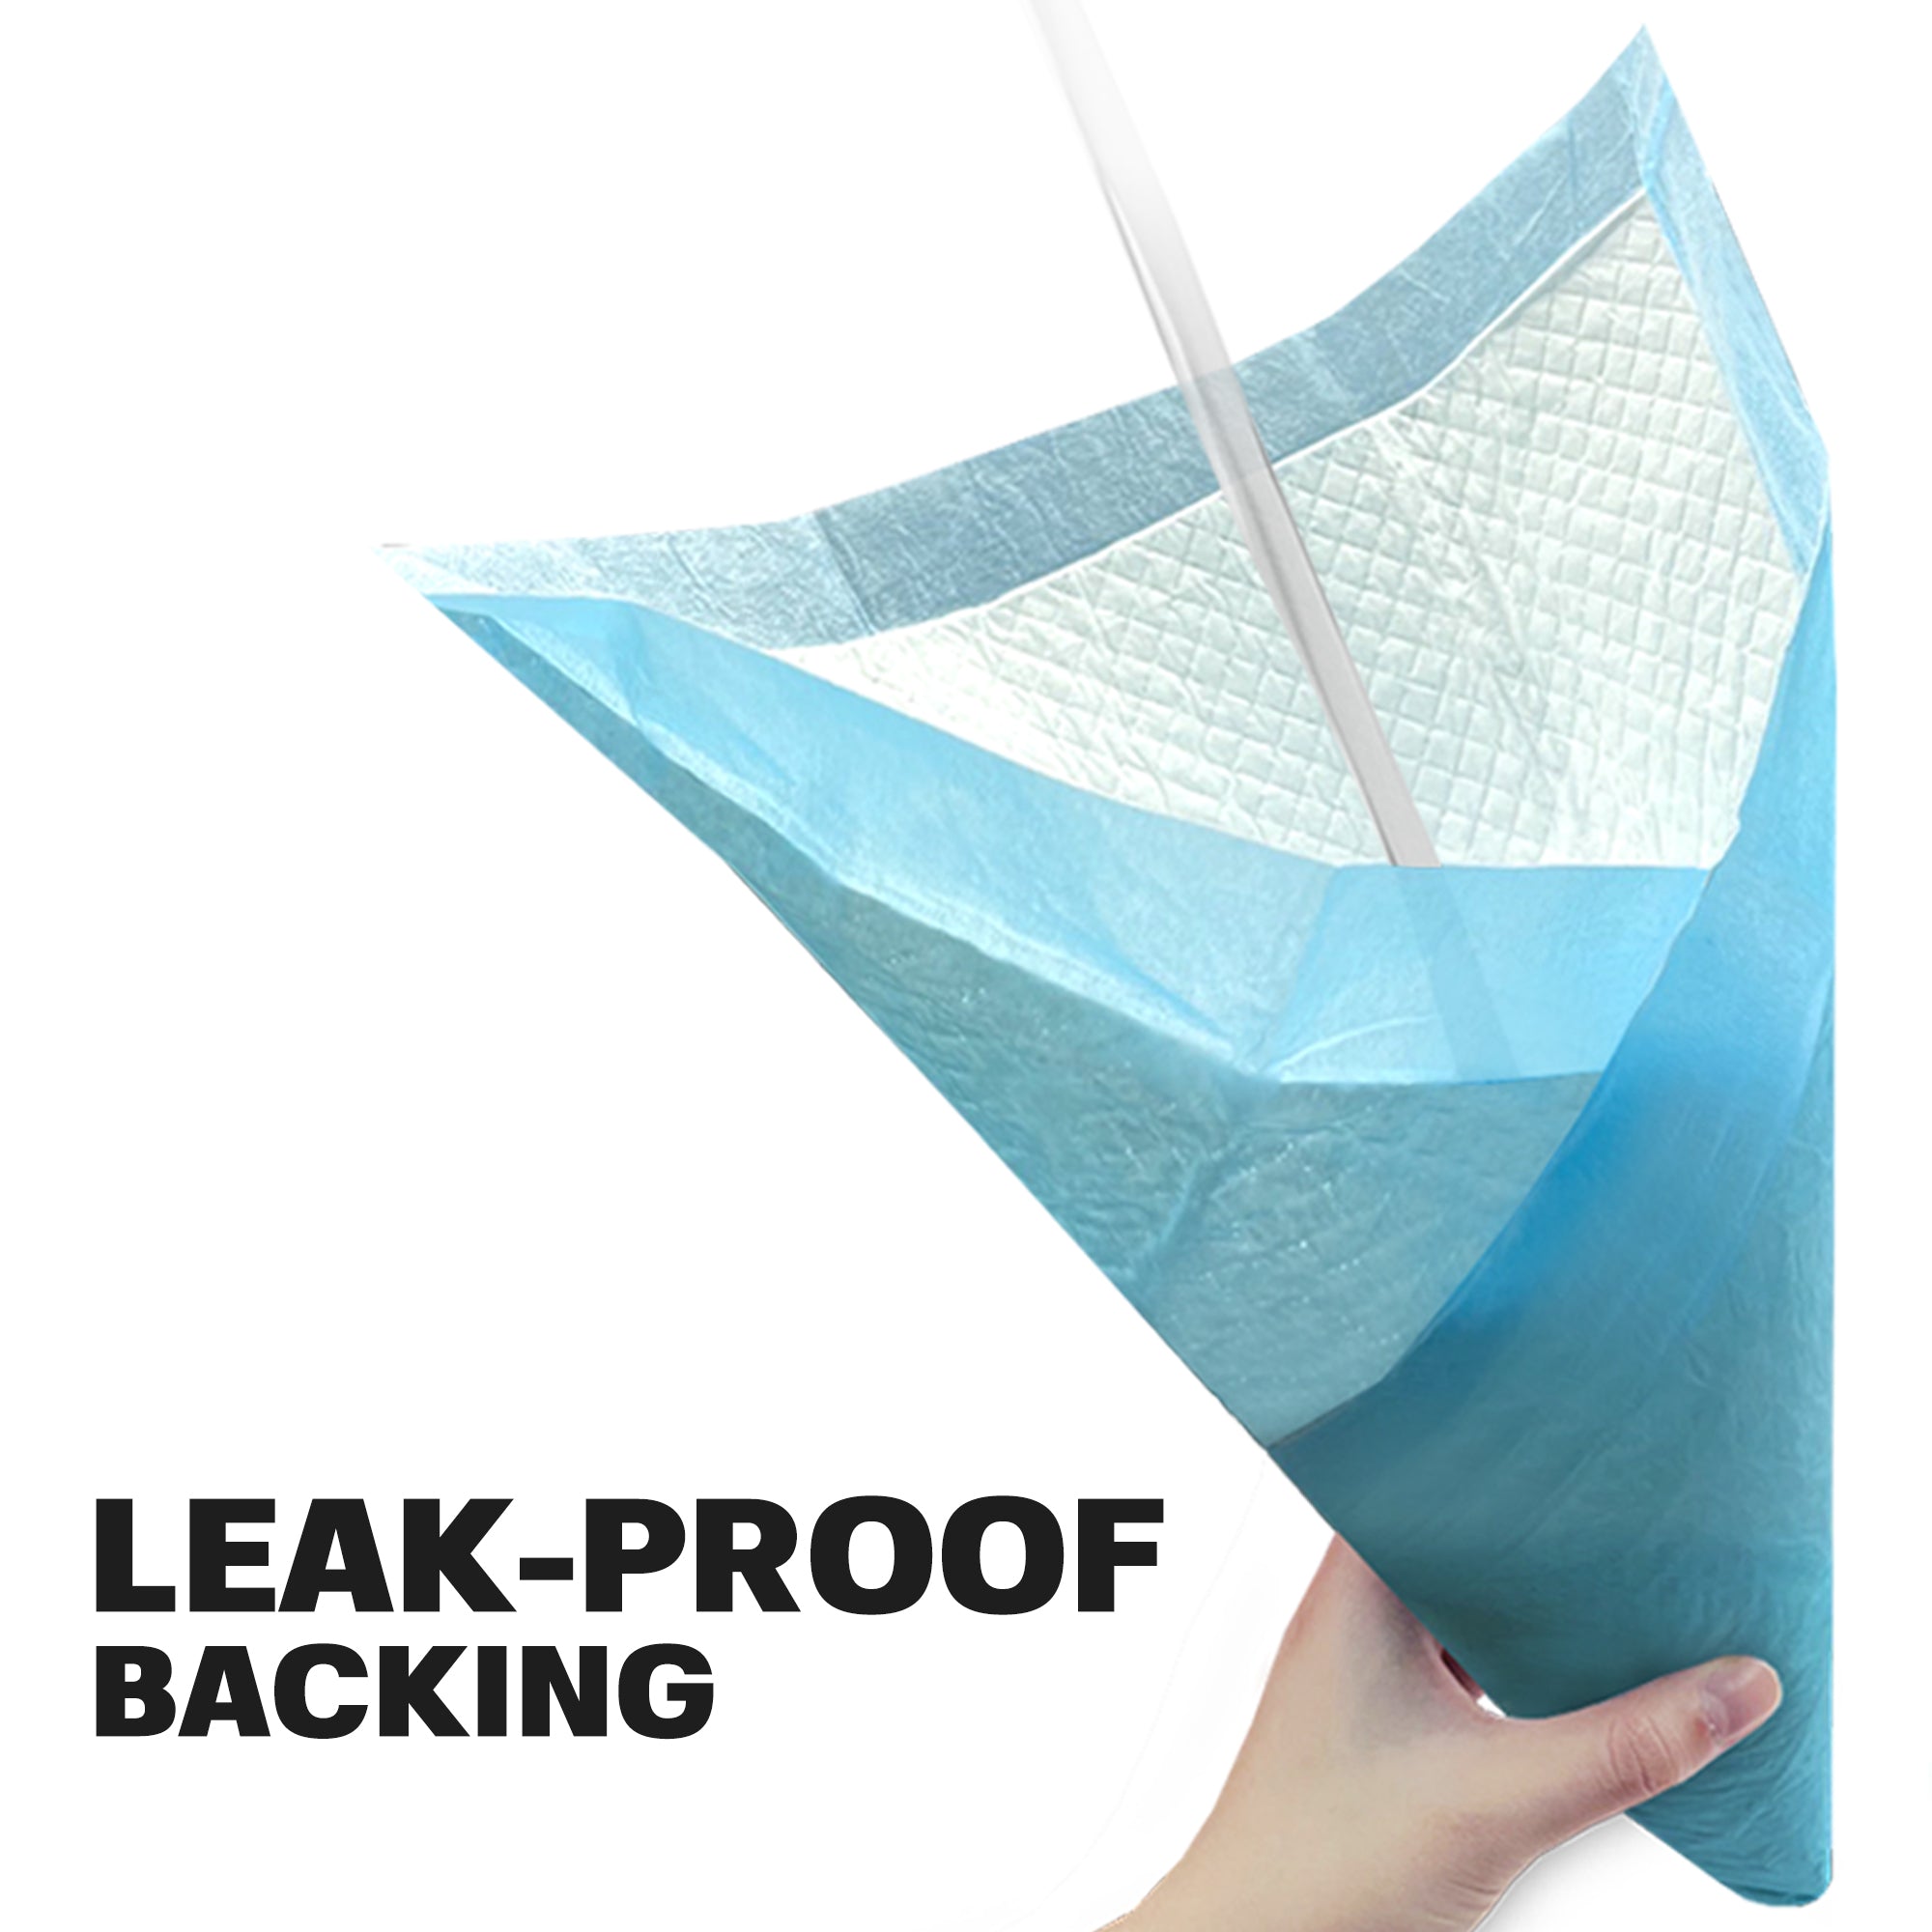 Training Pad Includes Leak-Proof Backing